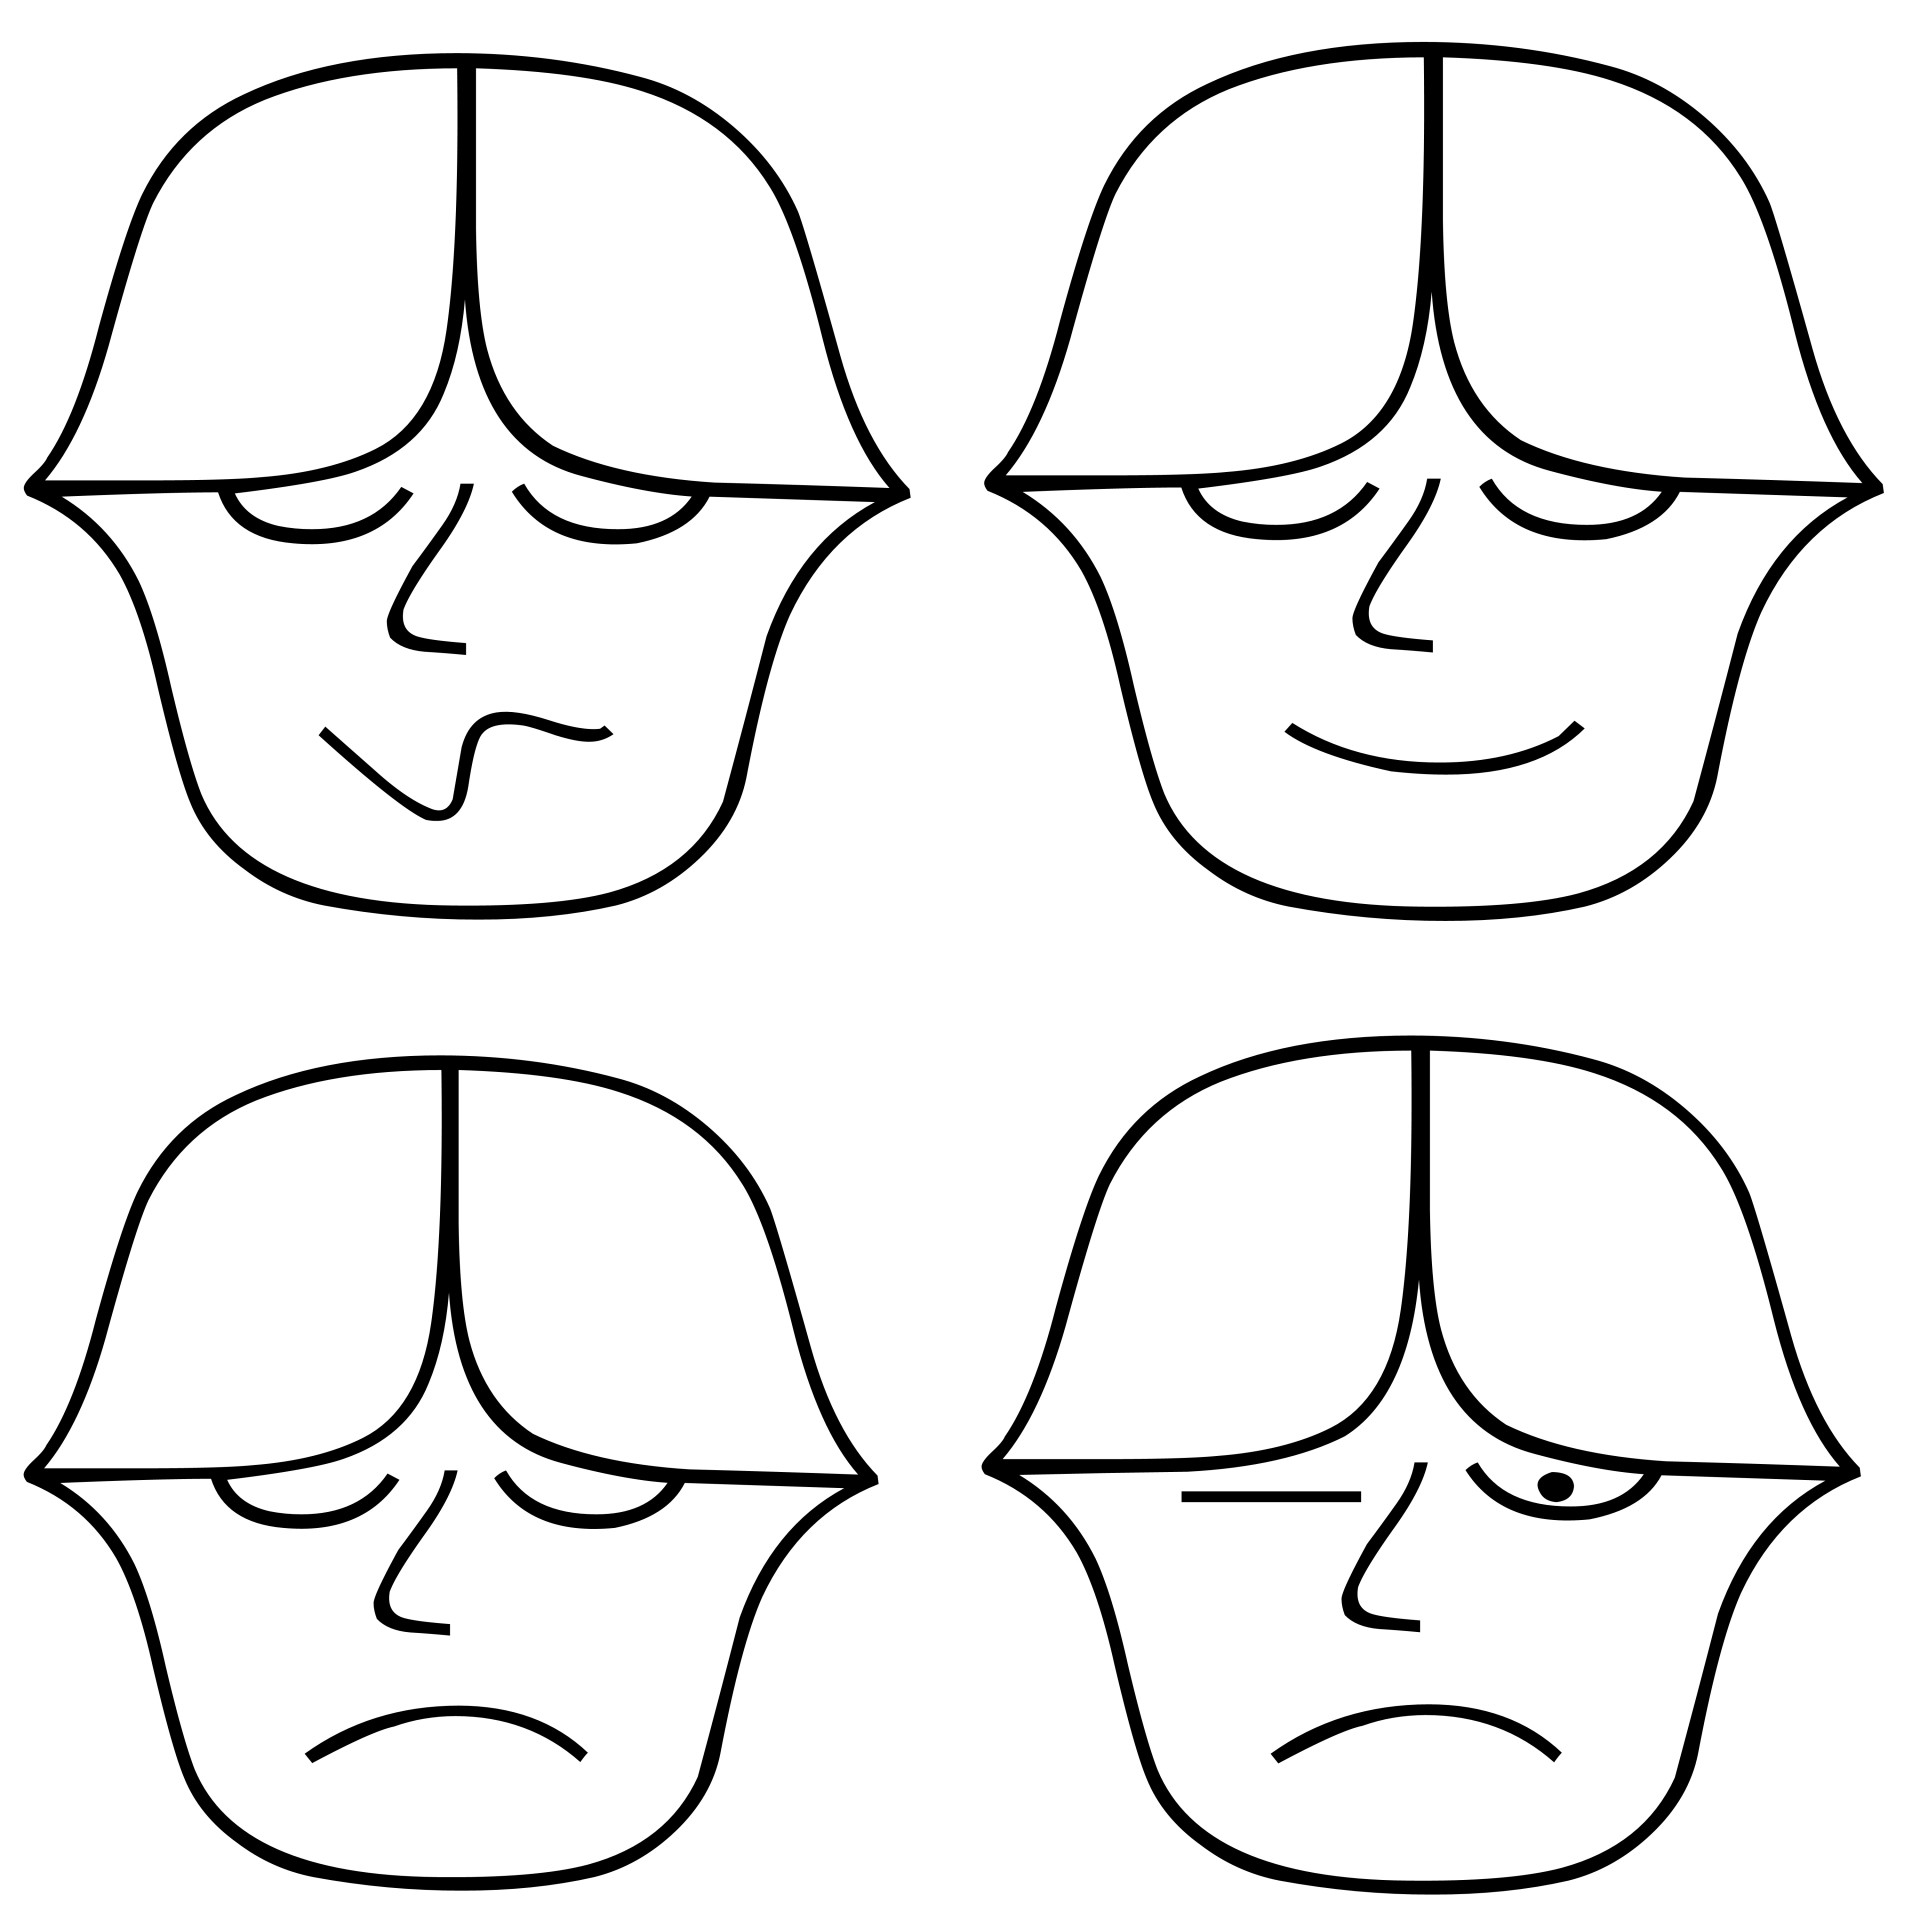 Face outline. Контур лица арт. Четыре лица. Голова с 4 лицами. Форма лица с эмоциями.